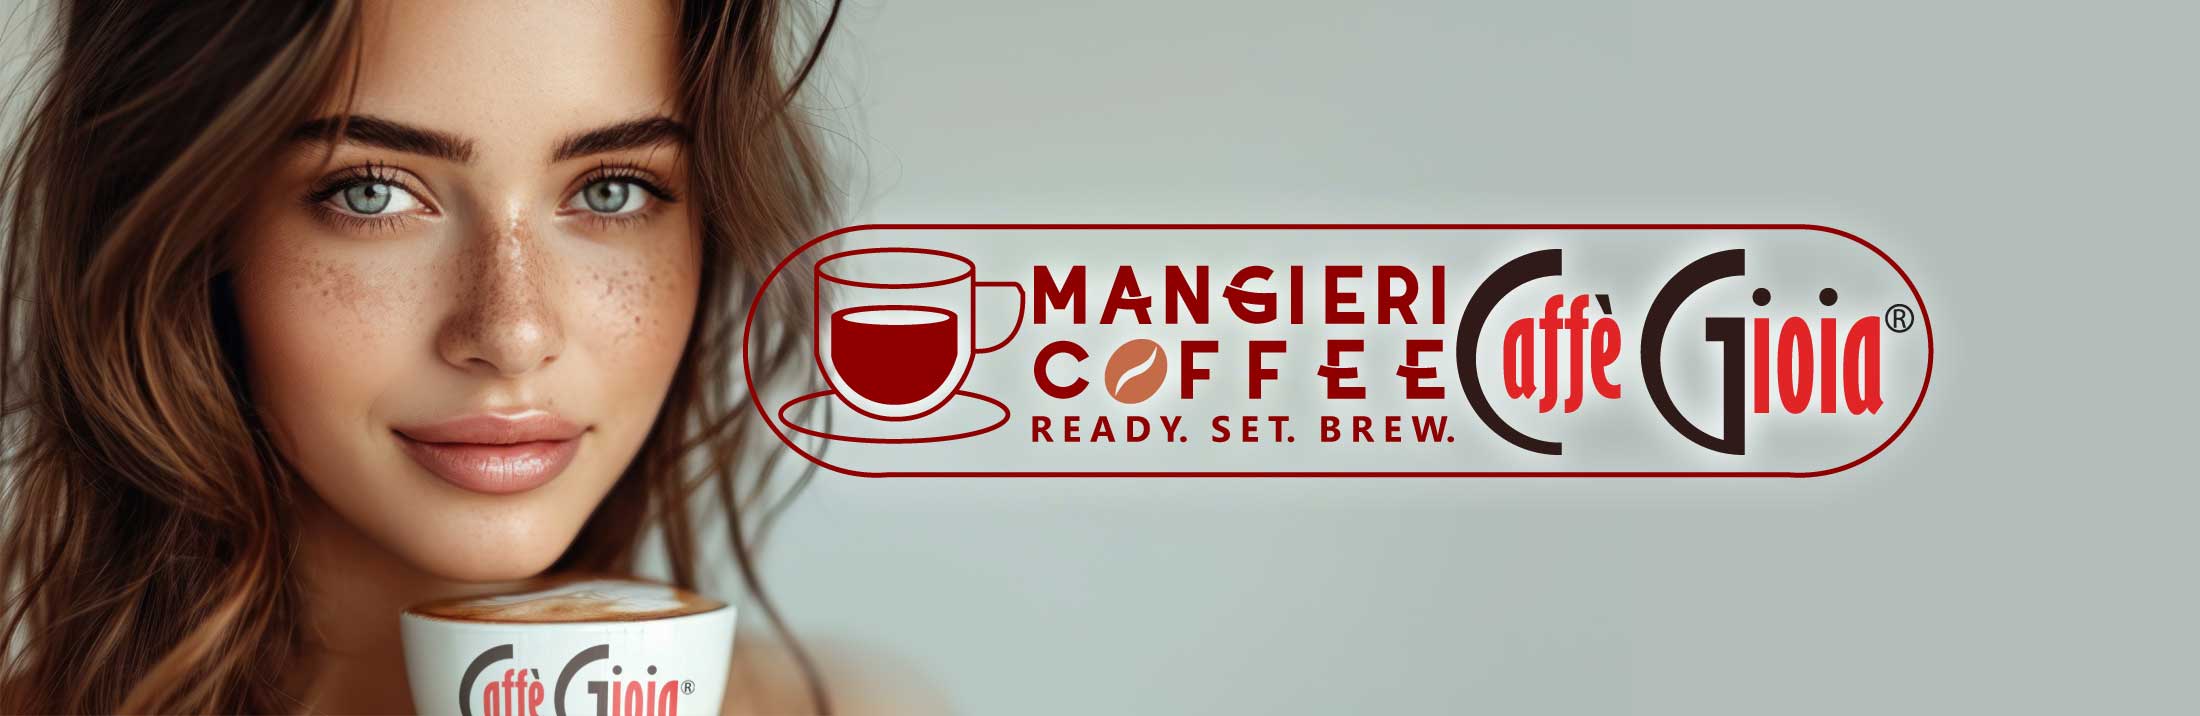 Mangieri Coffee, Caffè Gioia